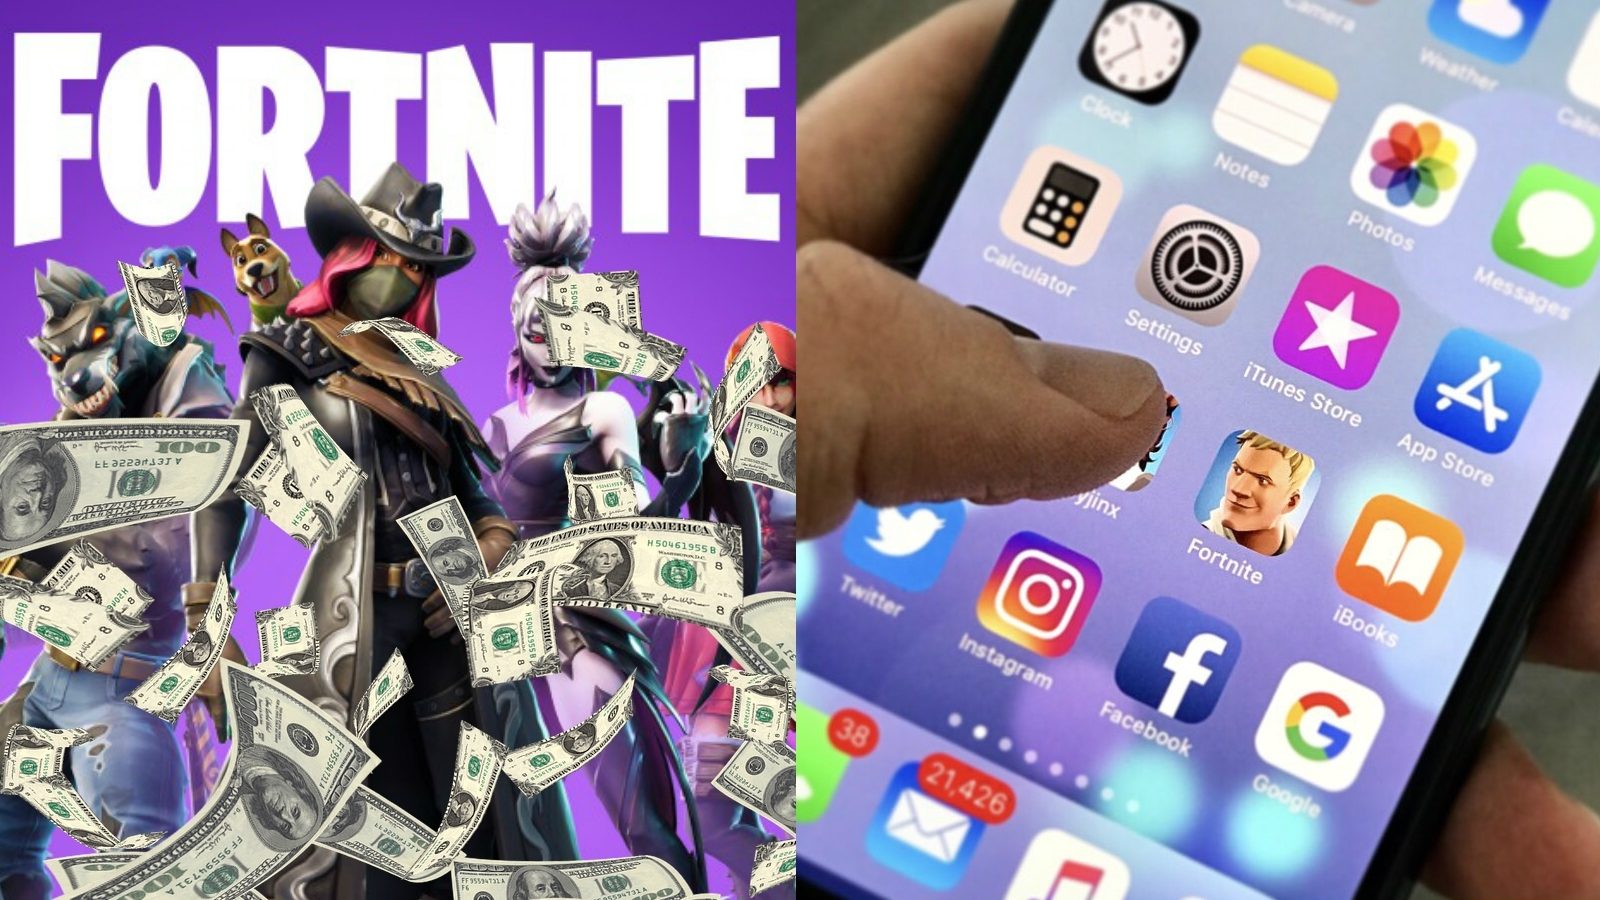 Fortnite crosses $100 million mark on iOS - PhoneArena